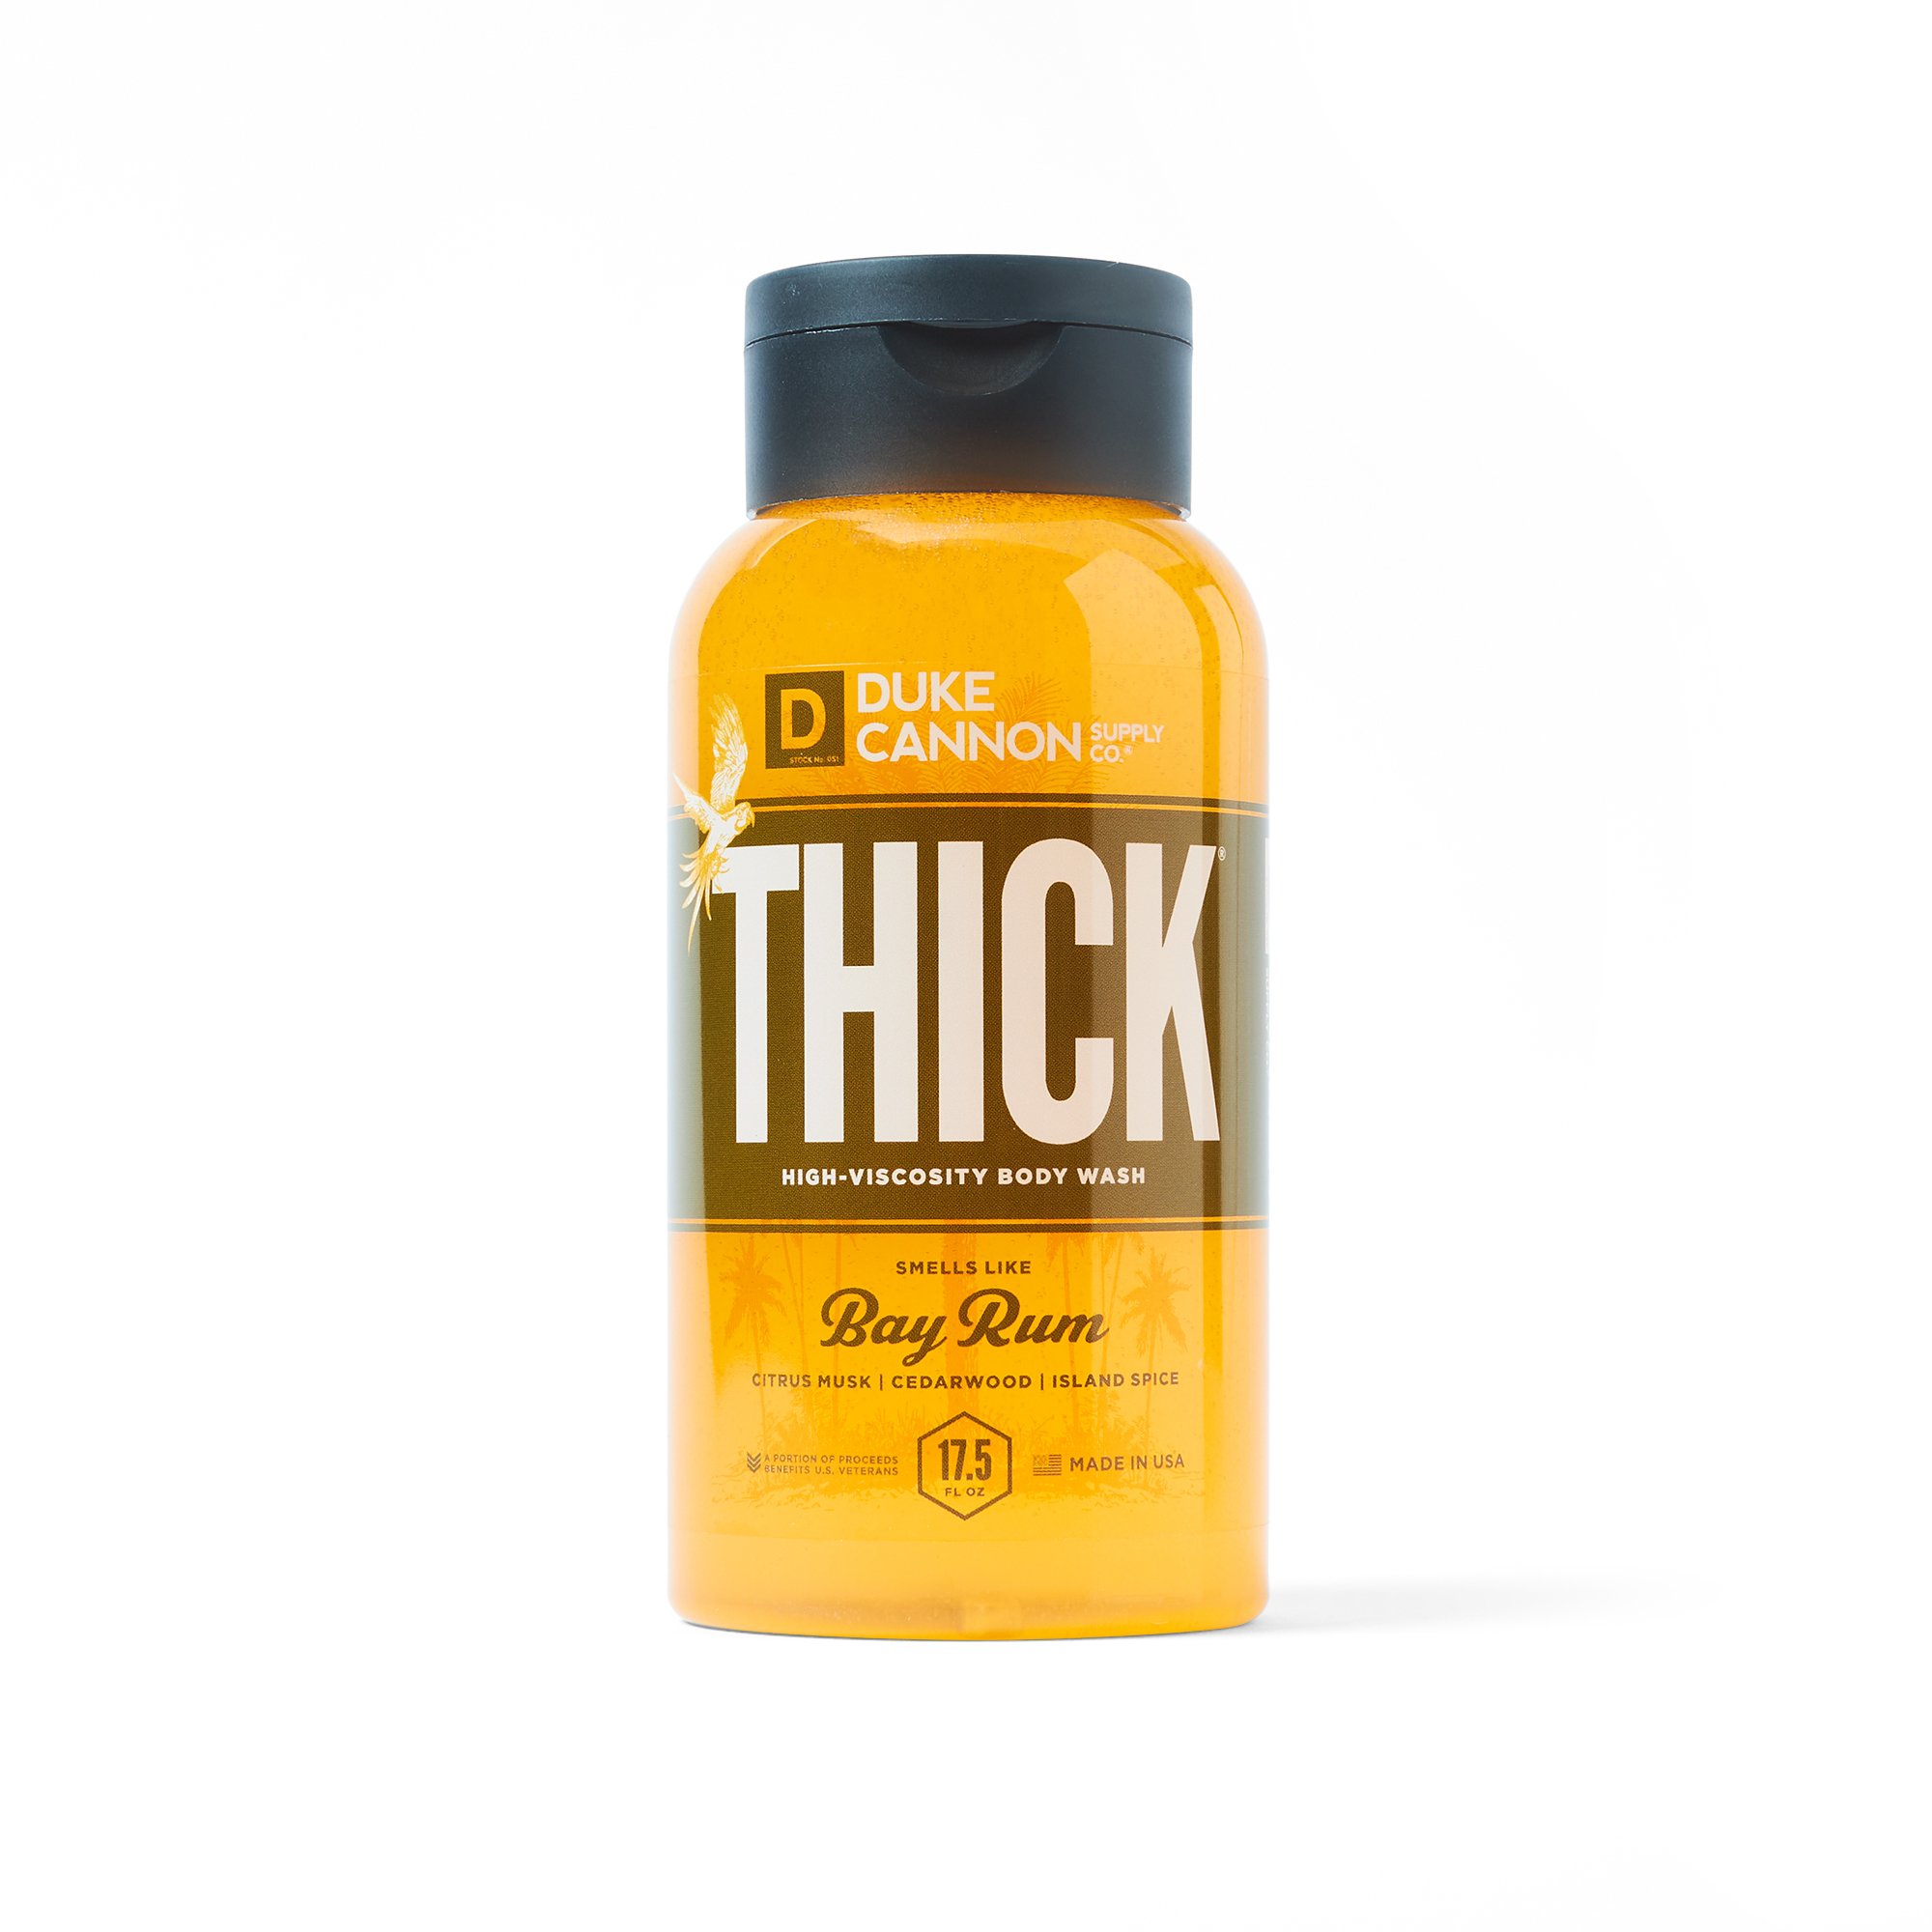 Duke Cannon Thick High Viscosity Body Wash Island Spice Citrus Musk Shop Body Wash At H E B 